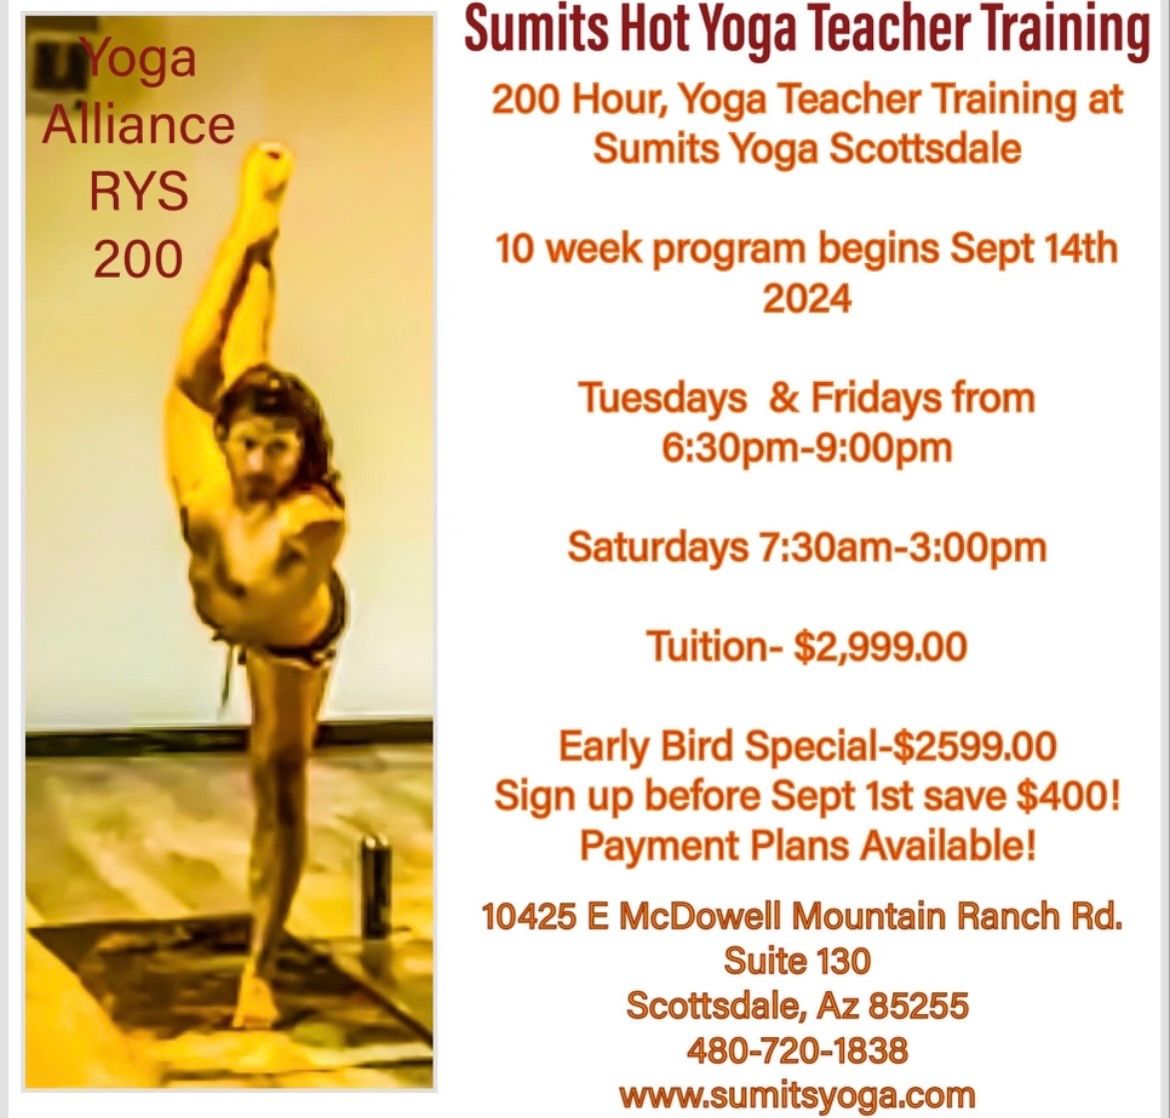 Sumits Hot Yoga Teacher Training 